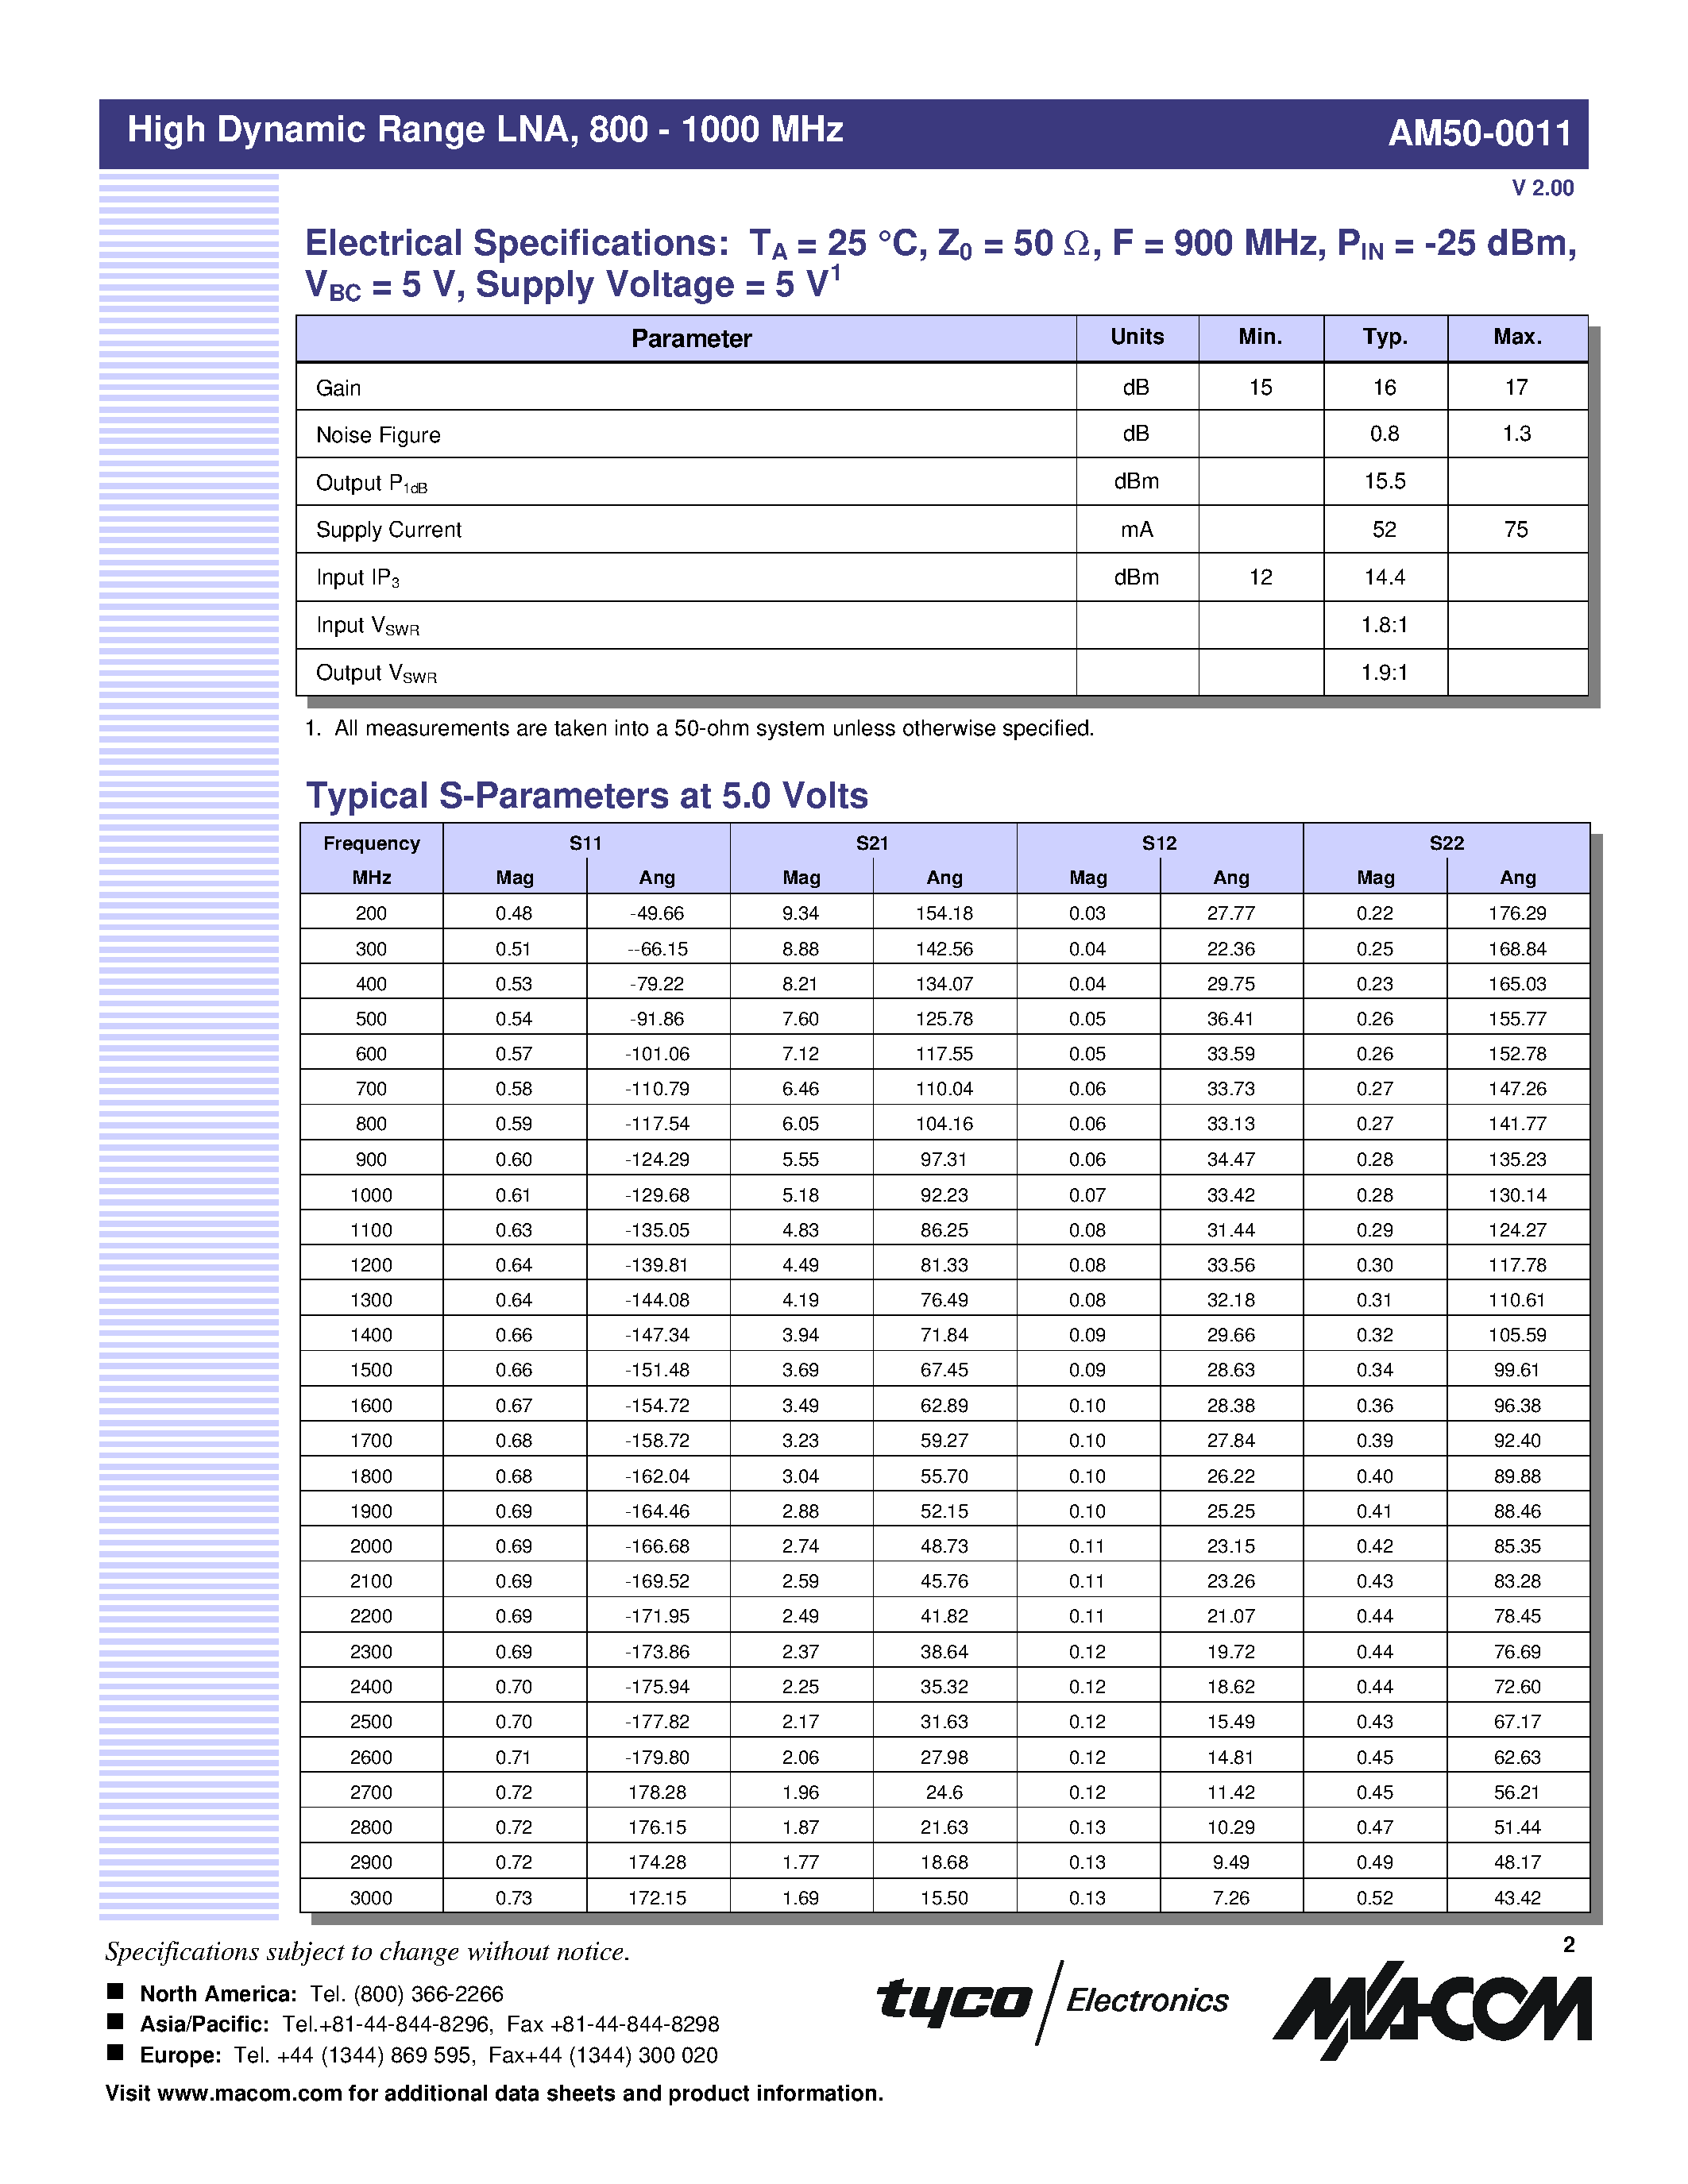 Datasheet AM50-0011 - High Dynamic Range LNA 800 - 1000 MHz page 2